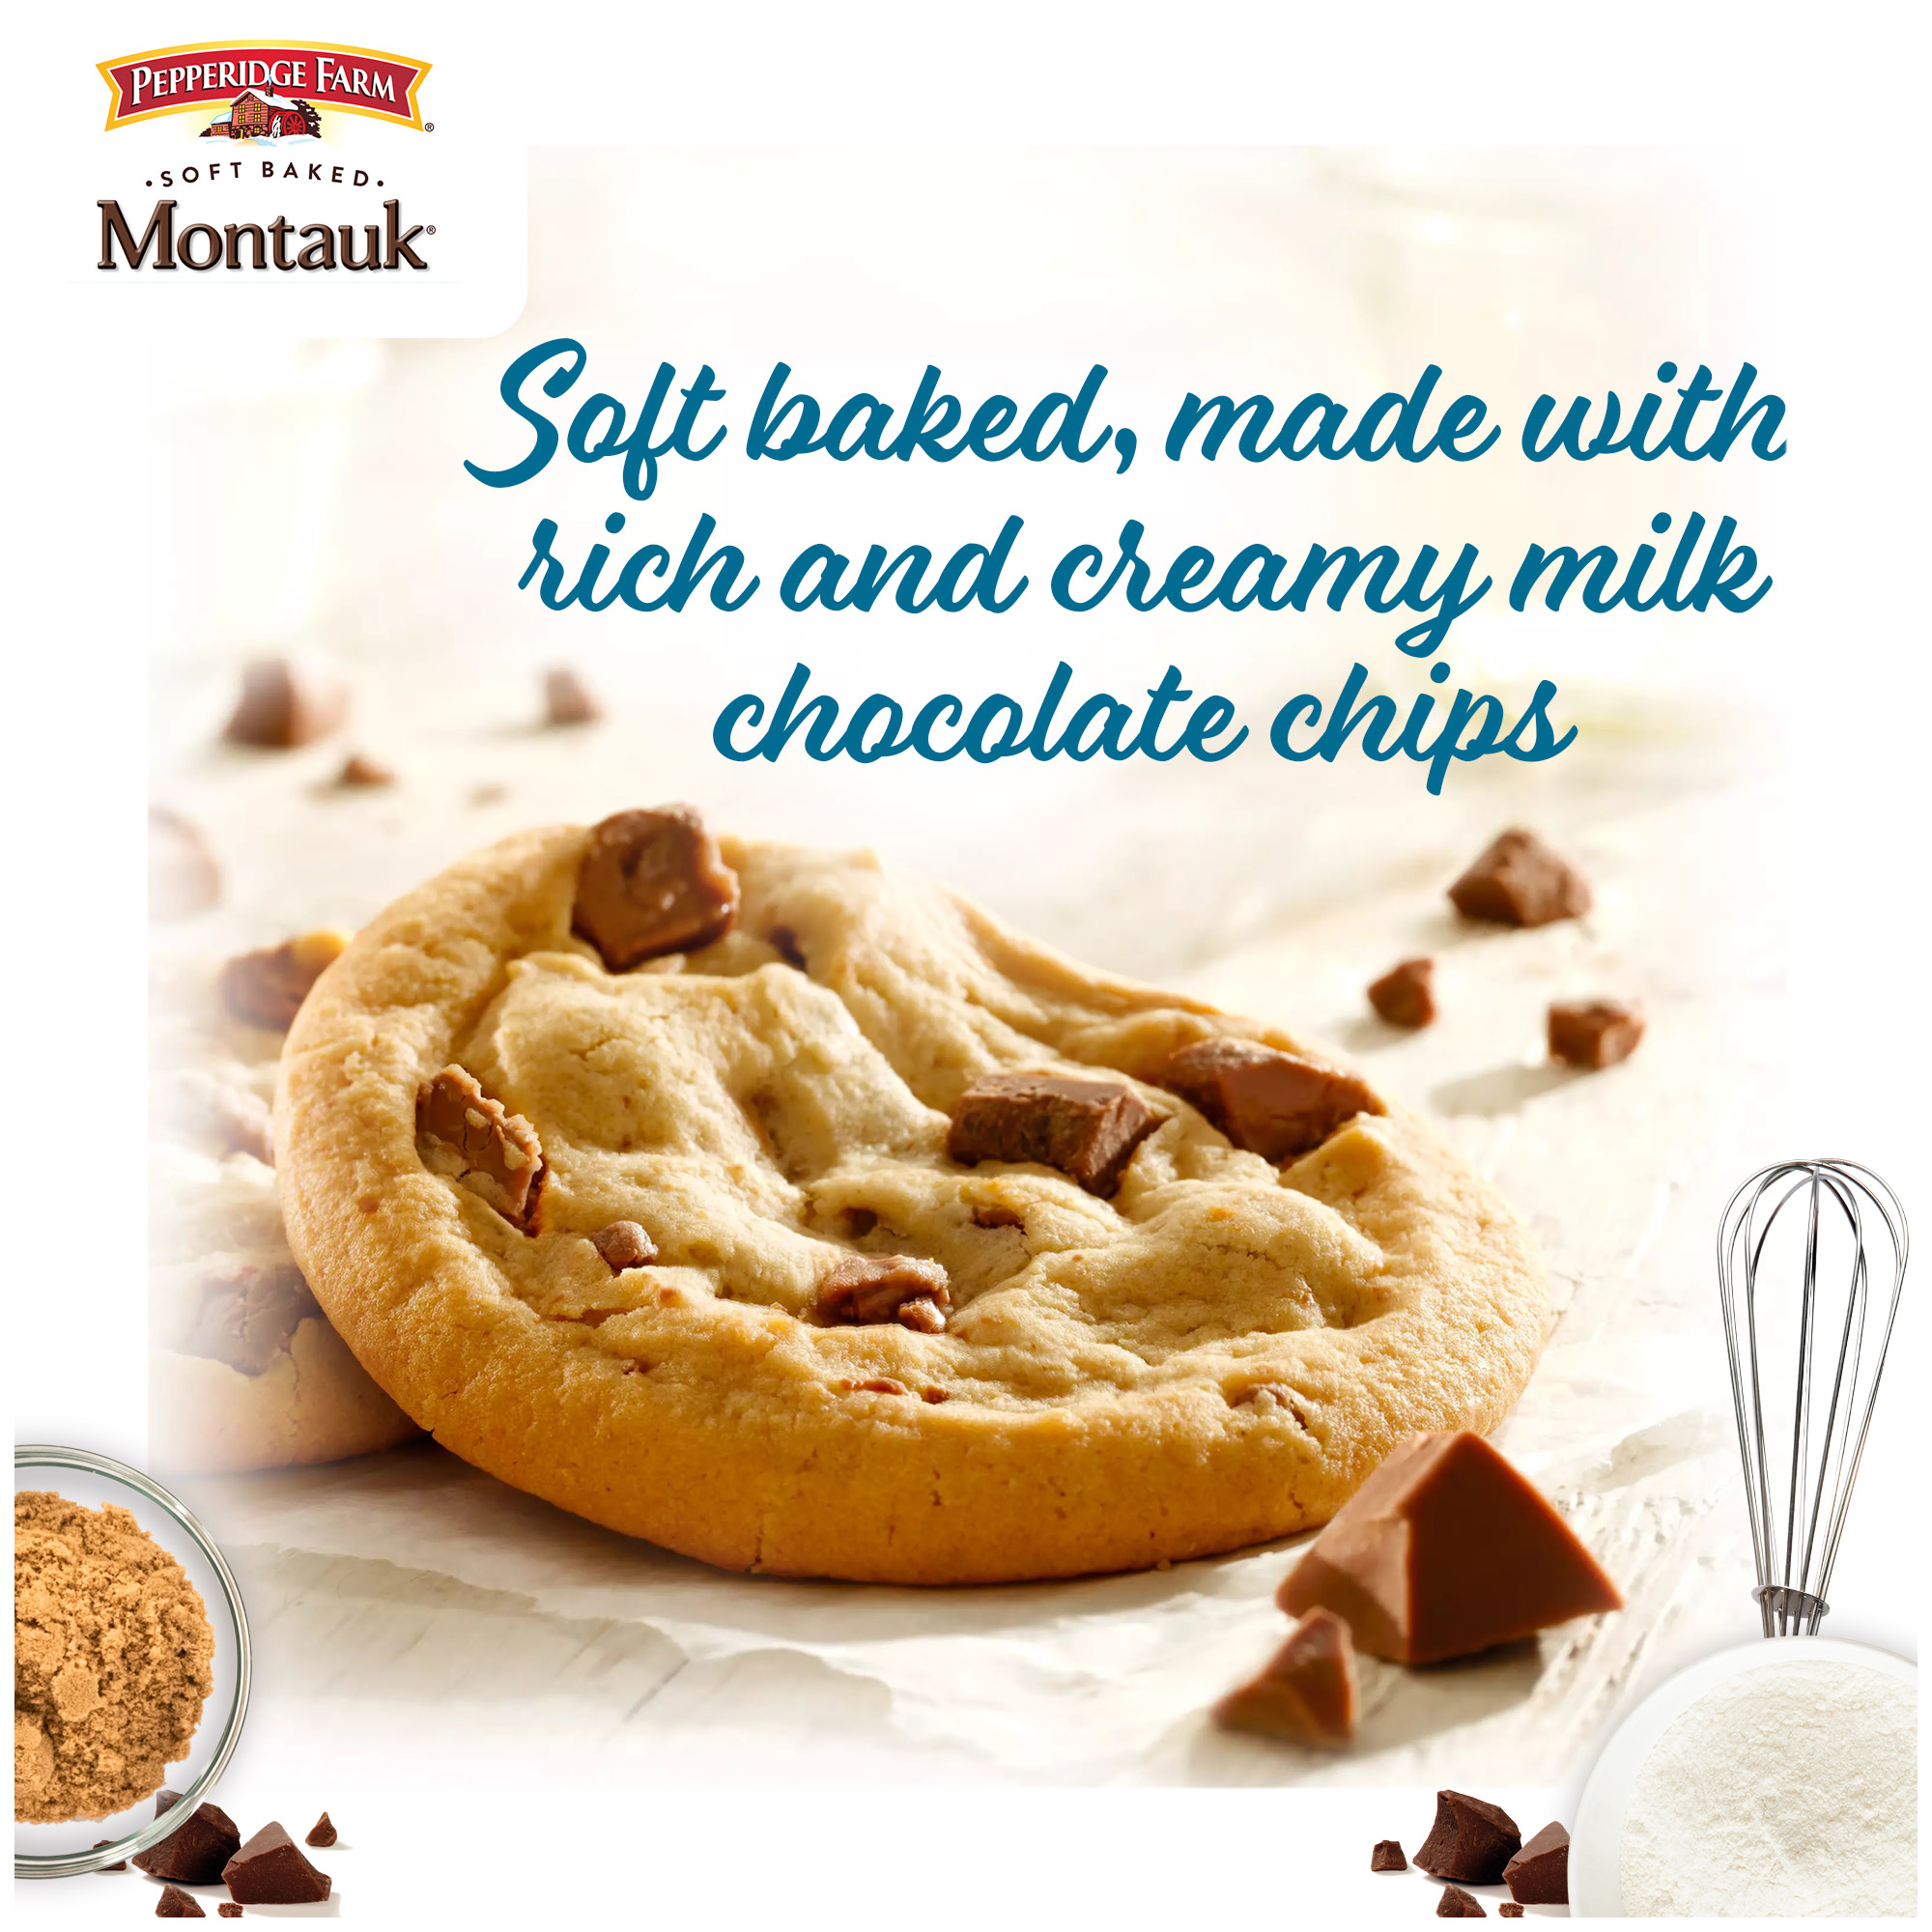 Pepperidge Farm Montauk Soft Baked Milk Chocolate Chunk Cookies, 8.6 oz Bag (8 Cookies) - image 2 of 9